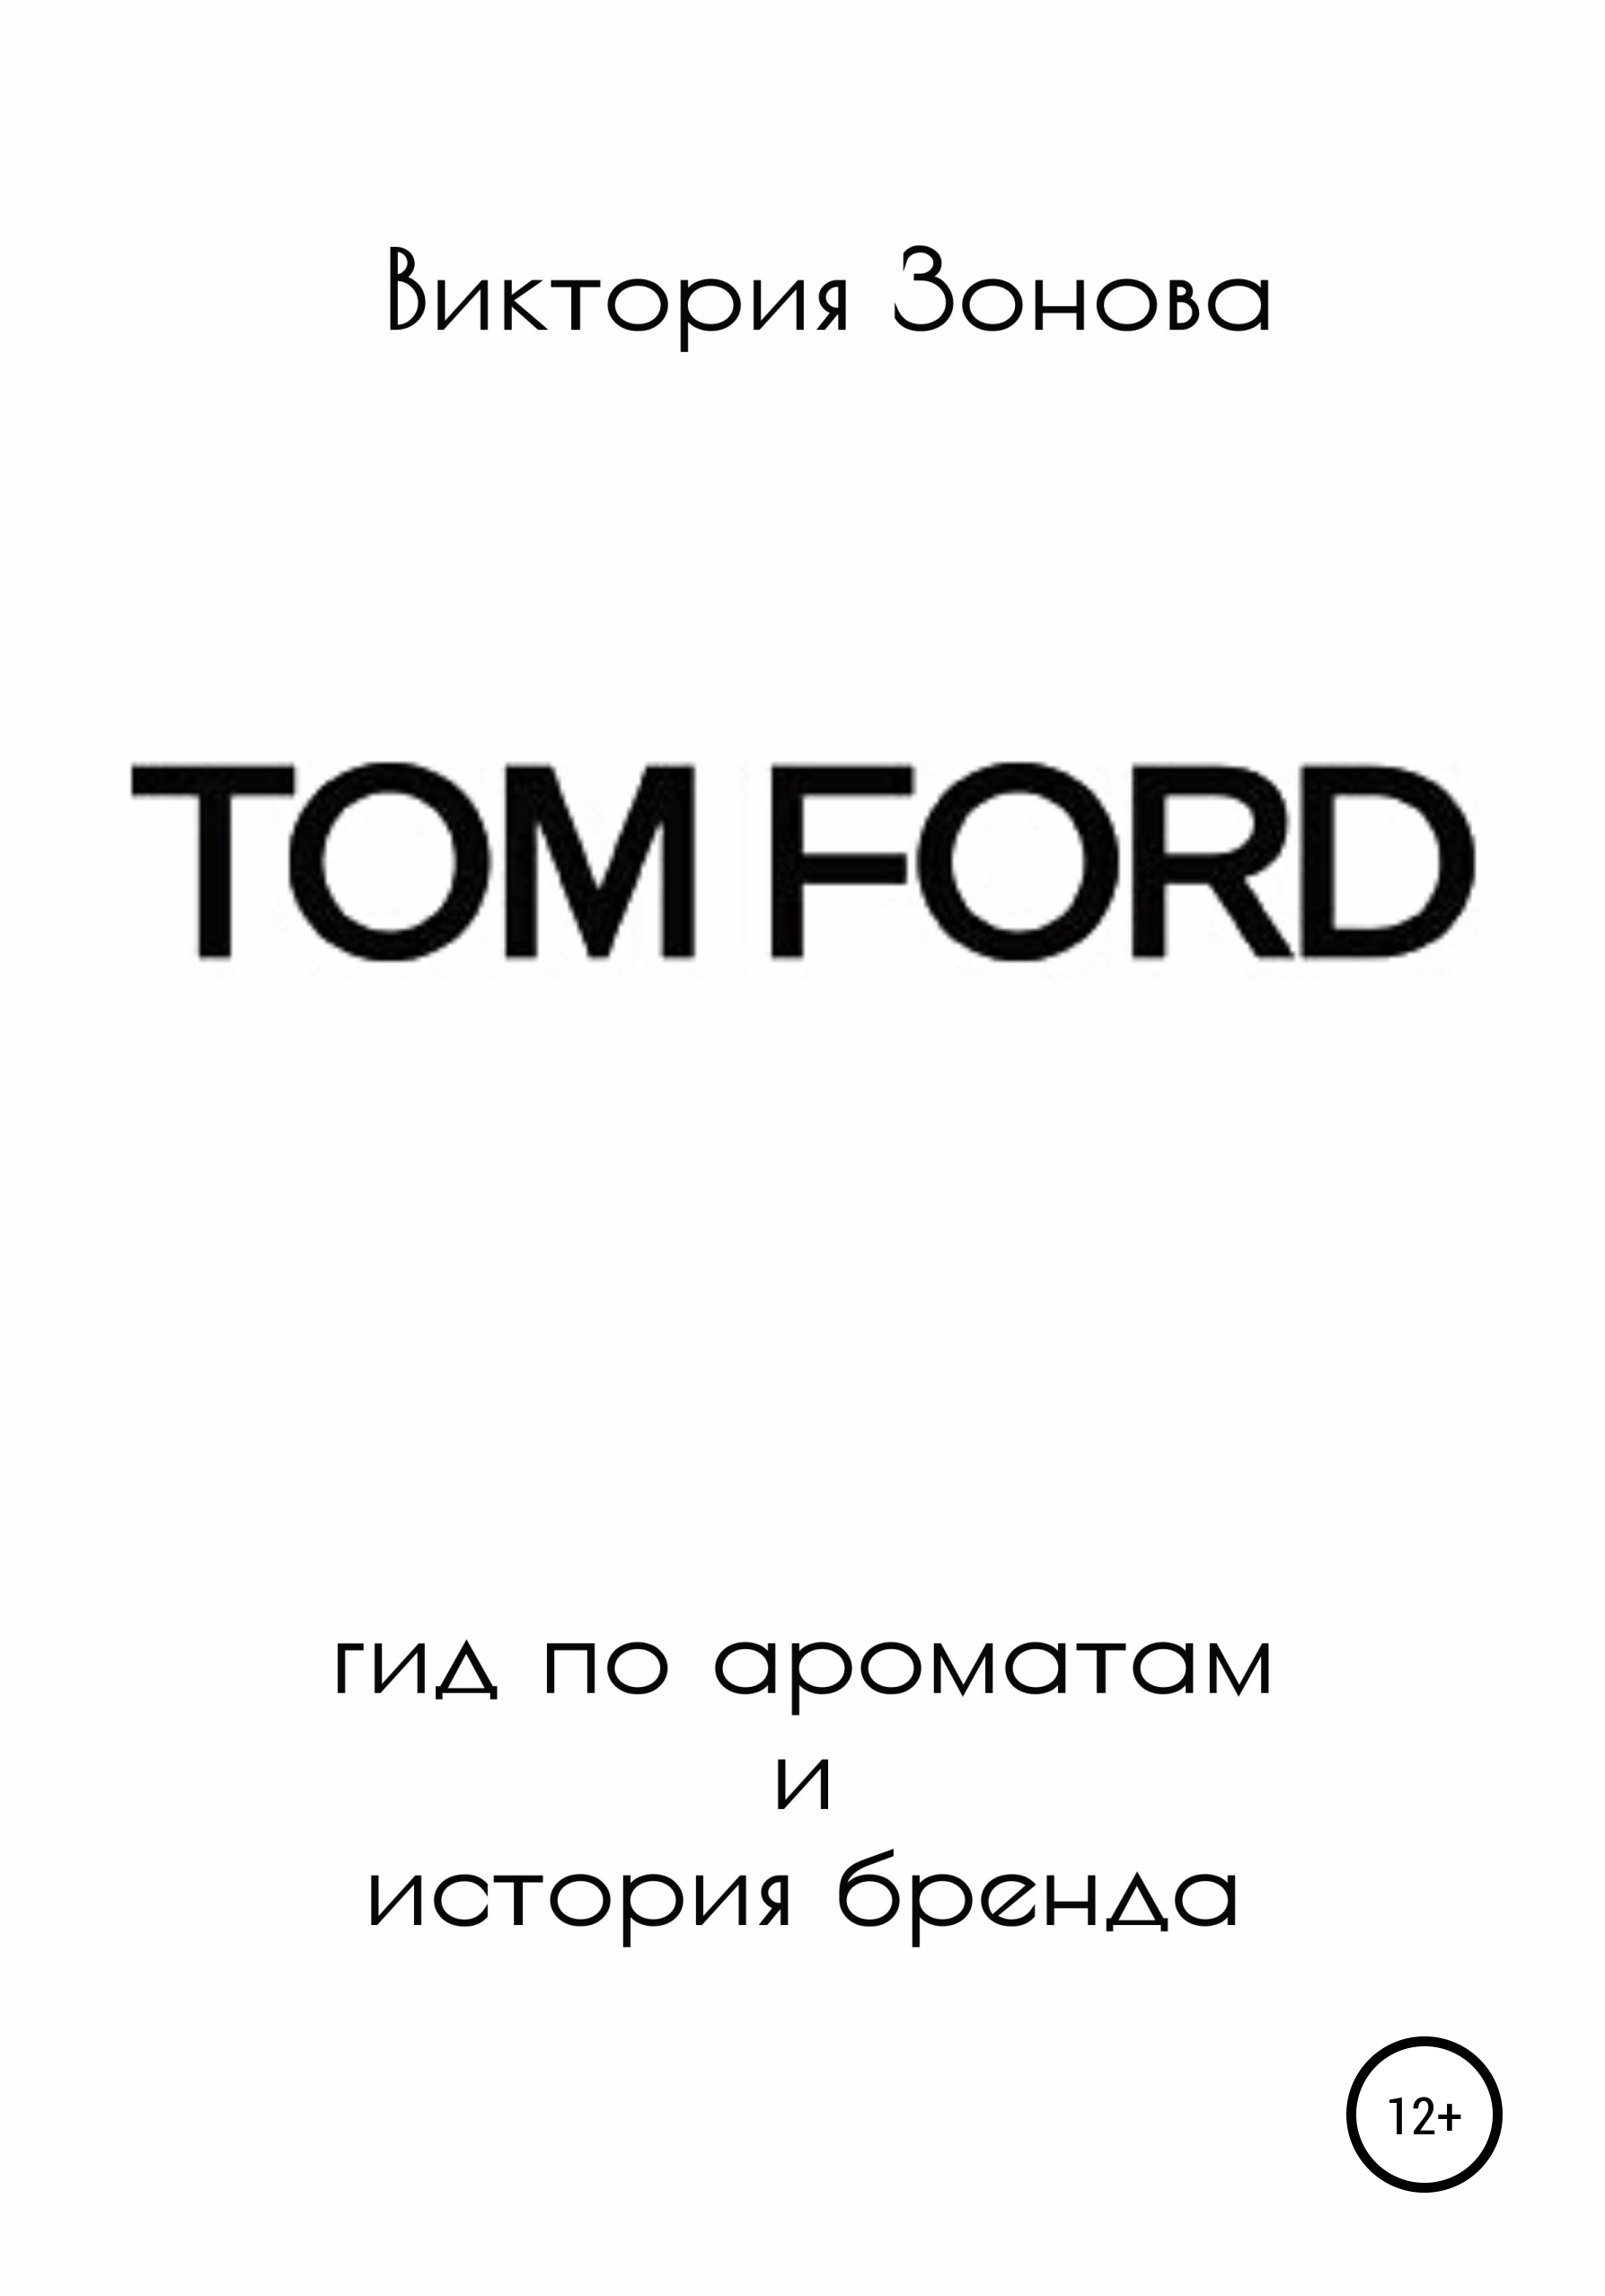 Tom Ford. Гид по ароматам и история бренда читать онлайн